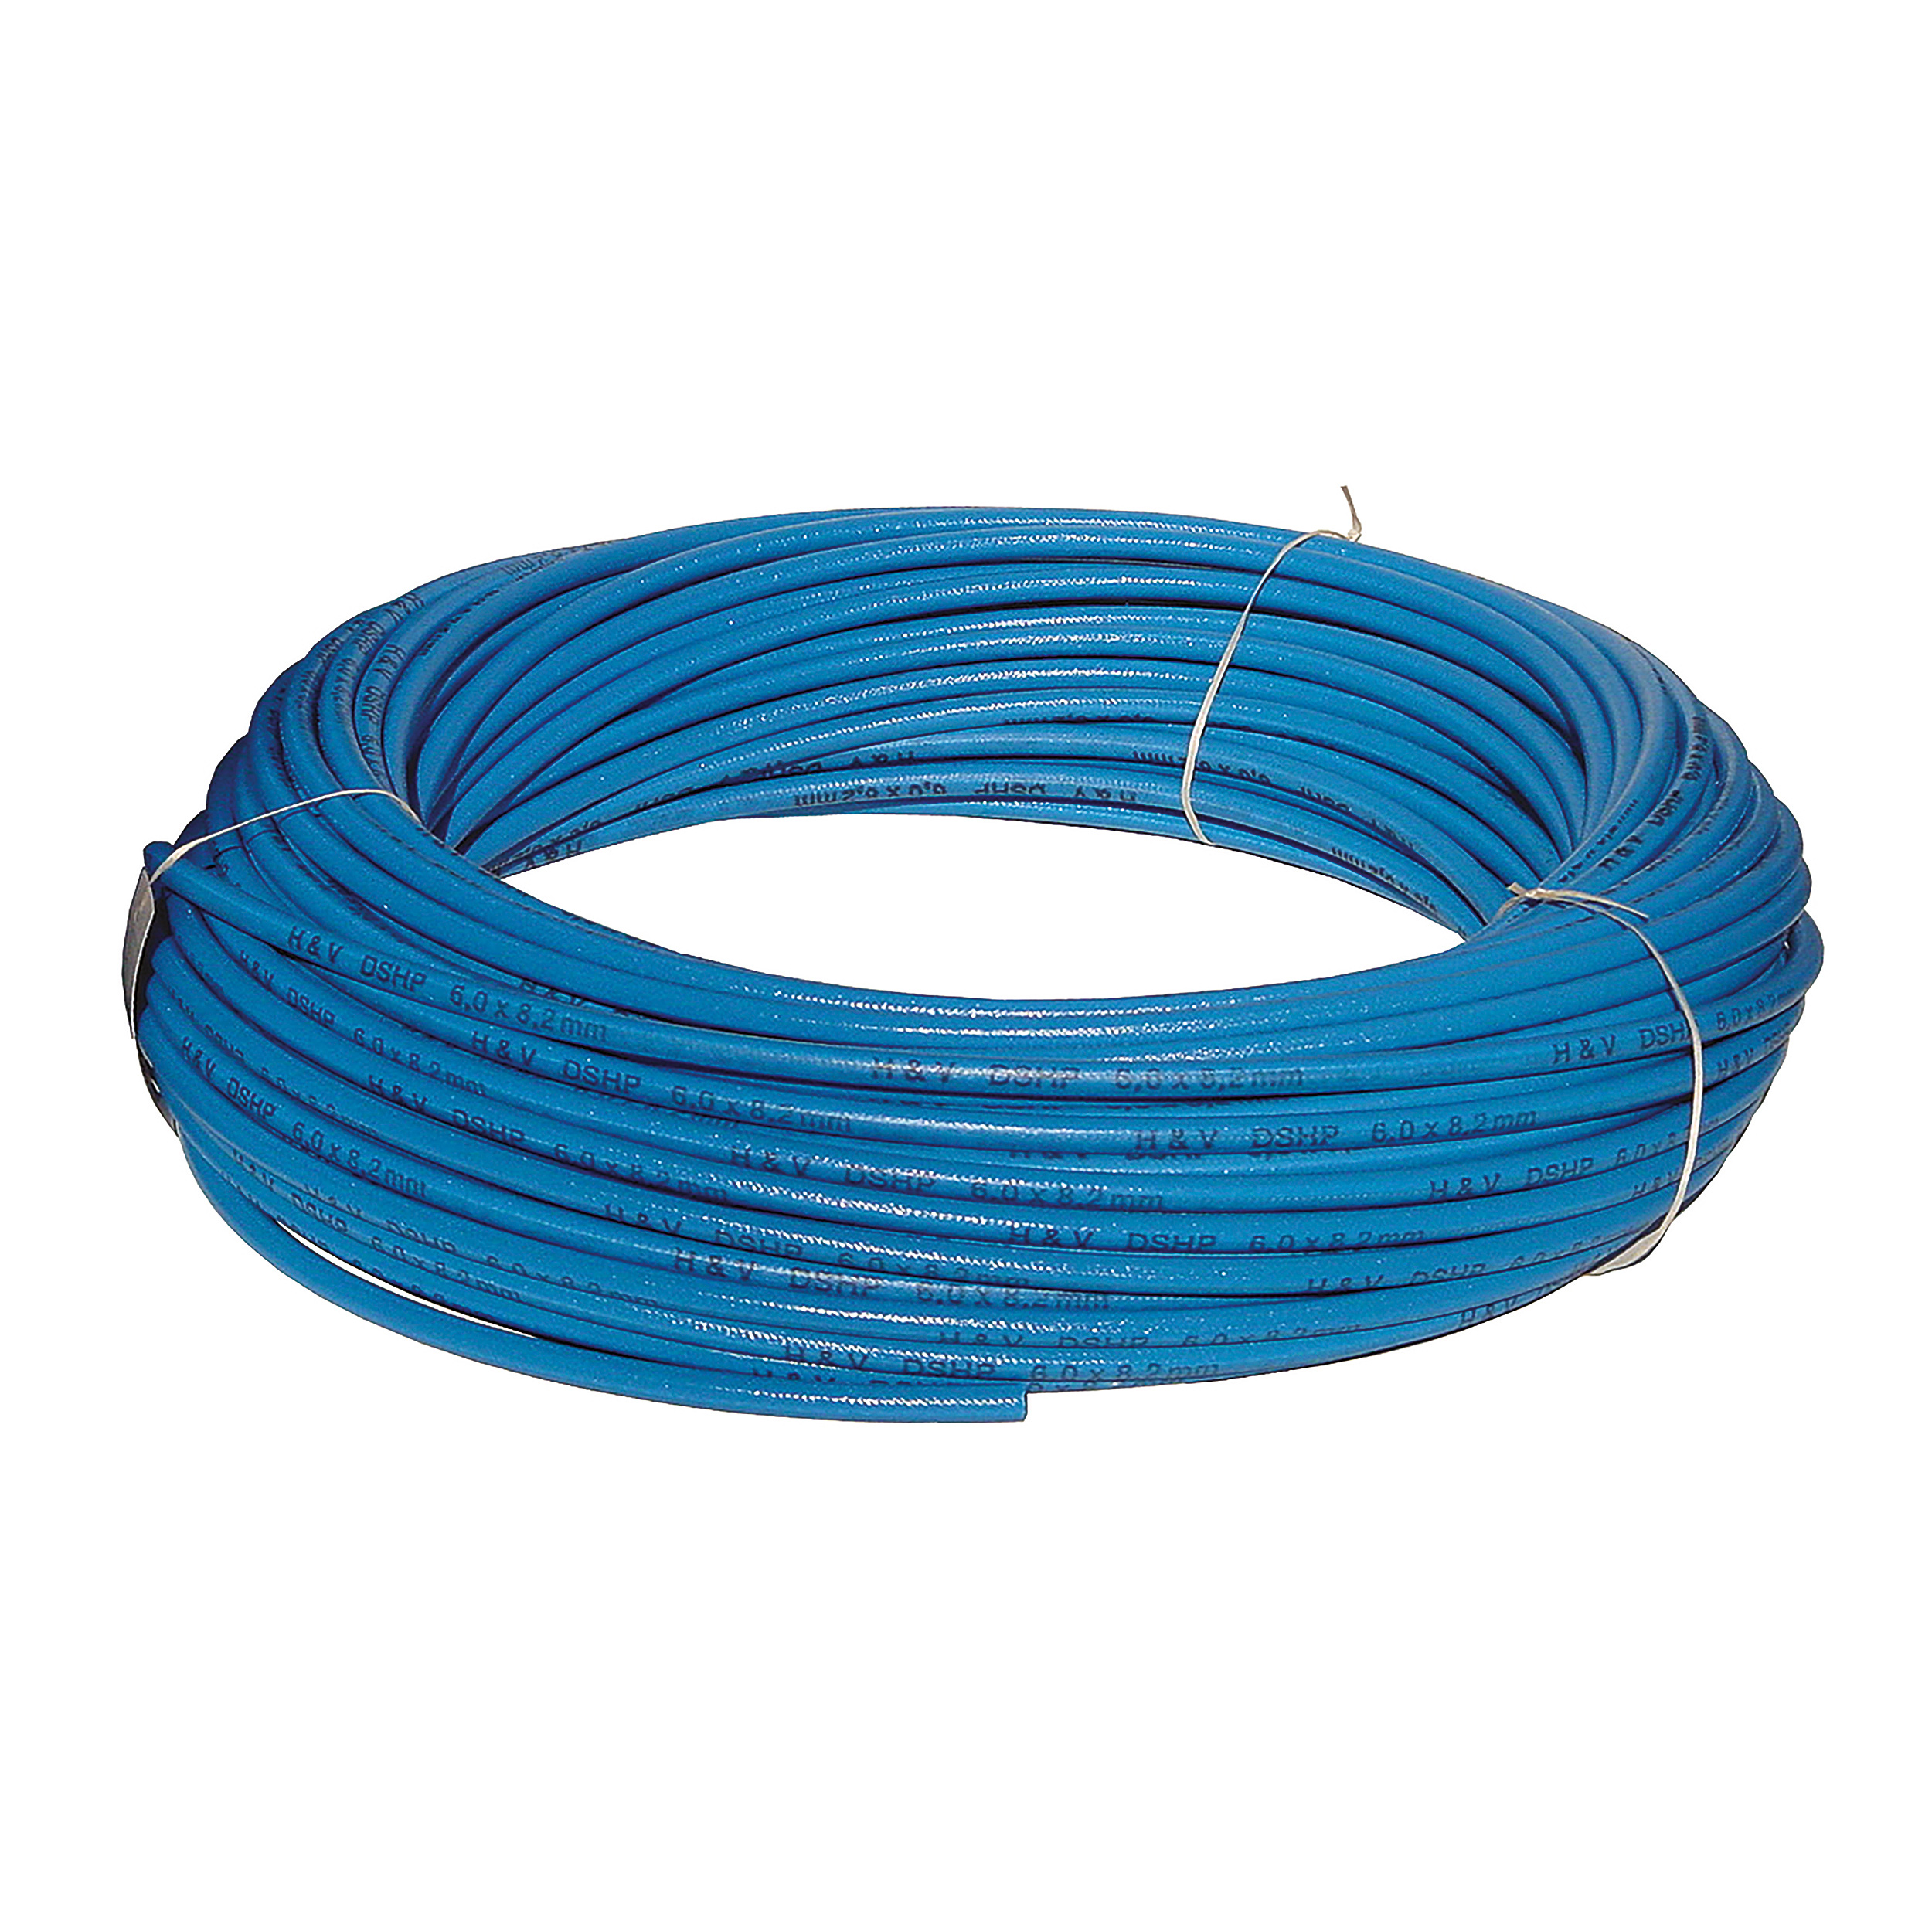 Special pneumatic hose, DN × s: Ø6 × 1.1 mm, operating pressure (air) at 20 °C: 551 psi, minimum bending radius: 60 mm, L: 50 m